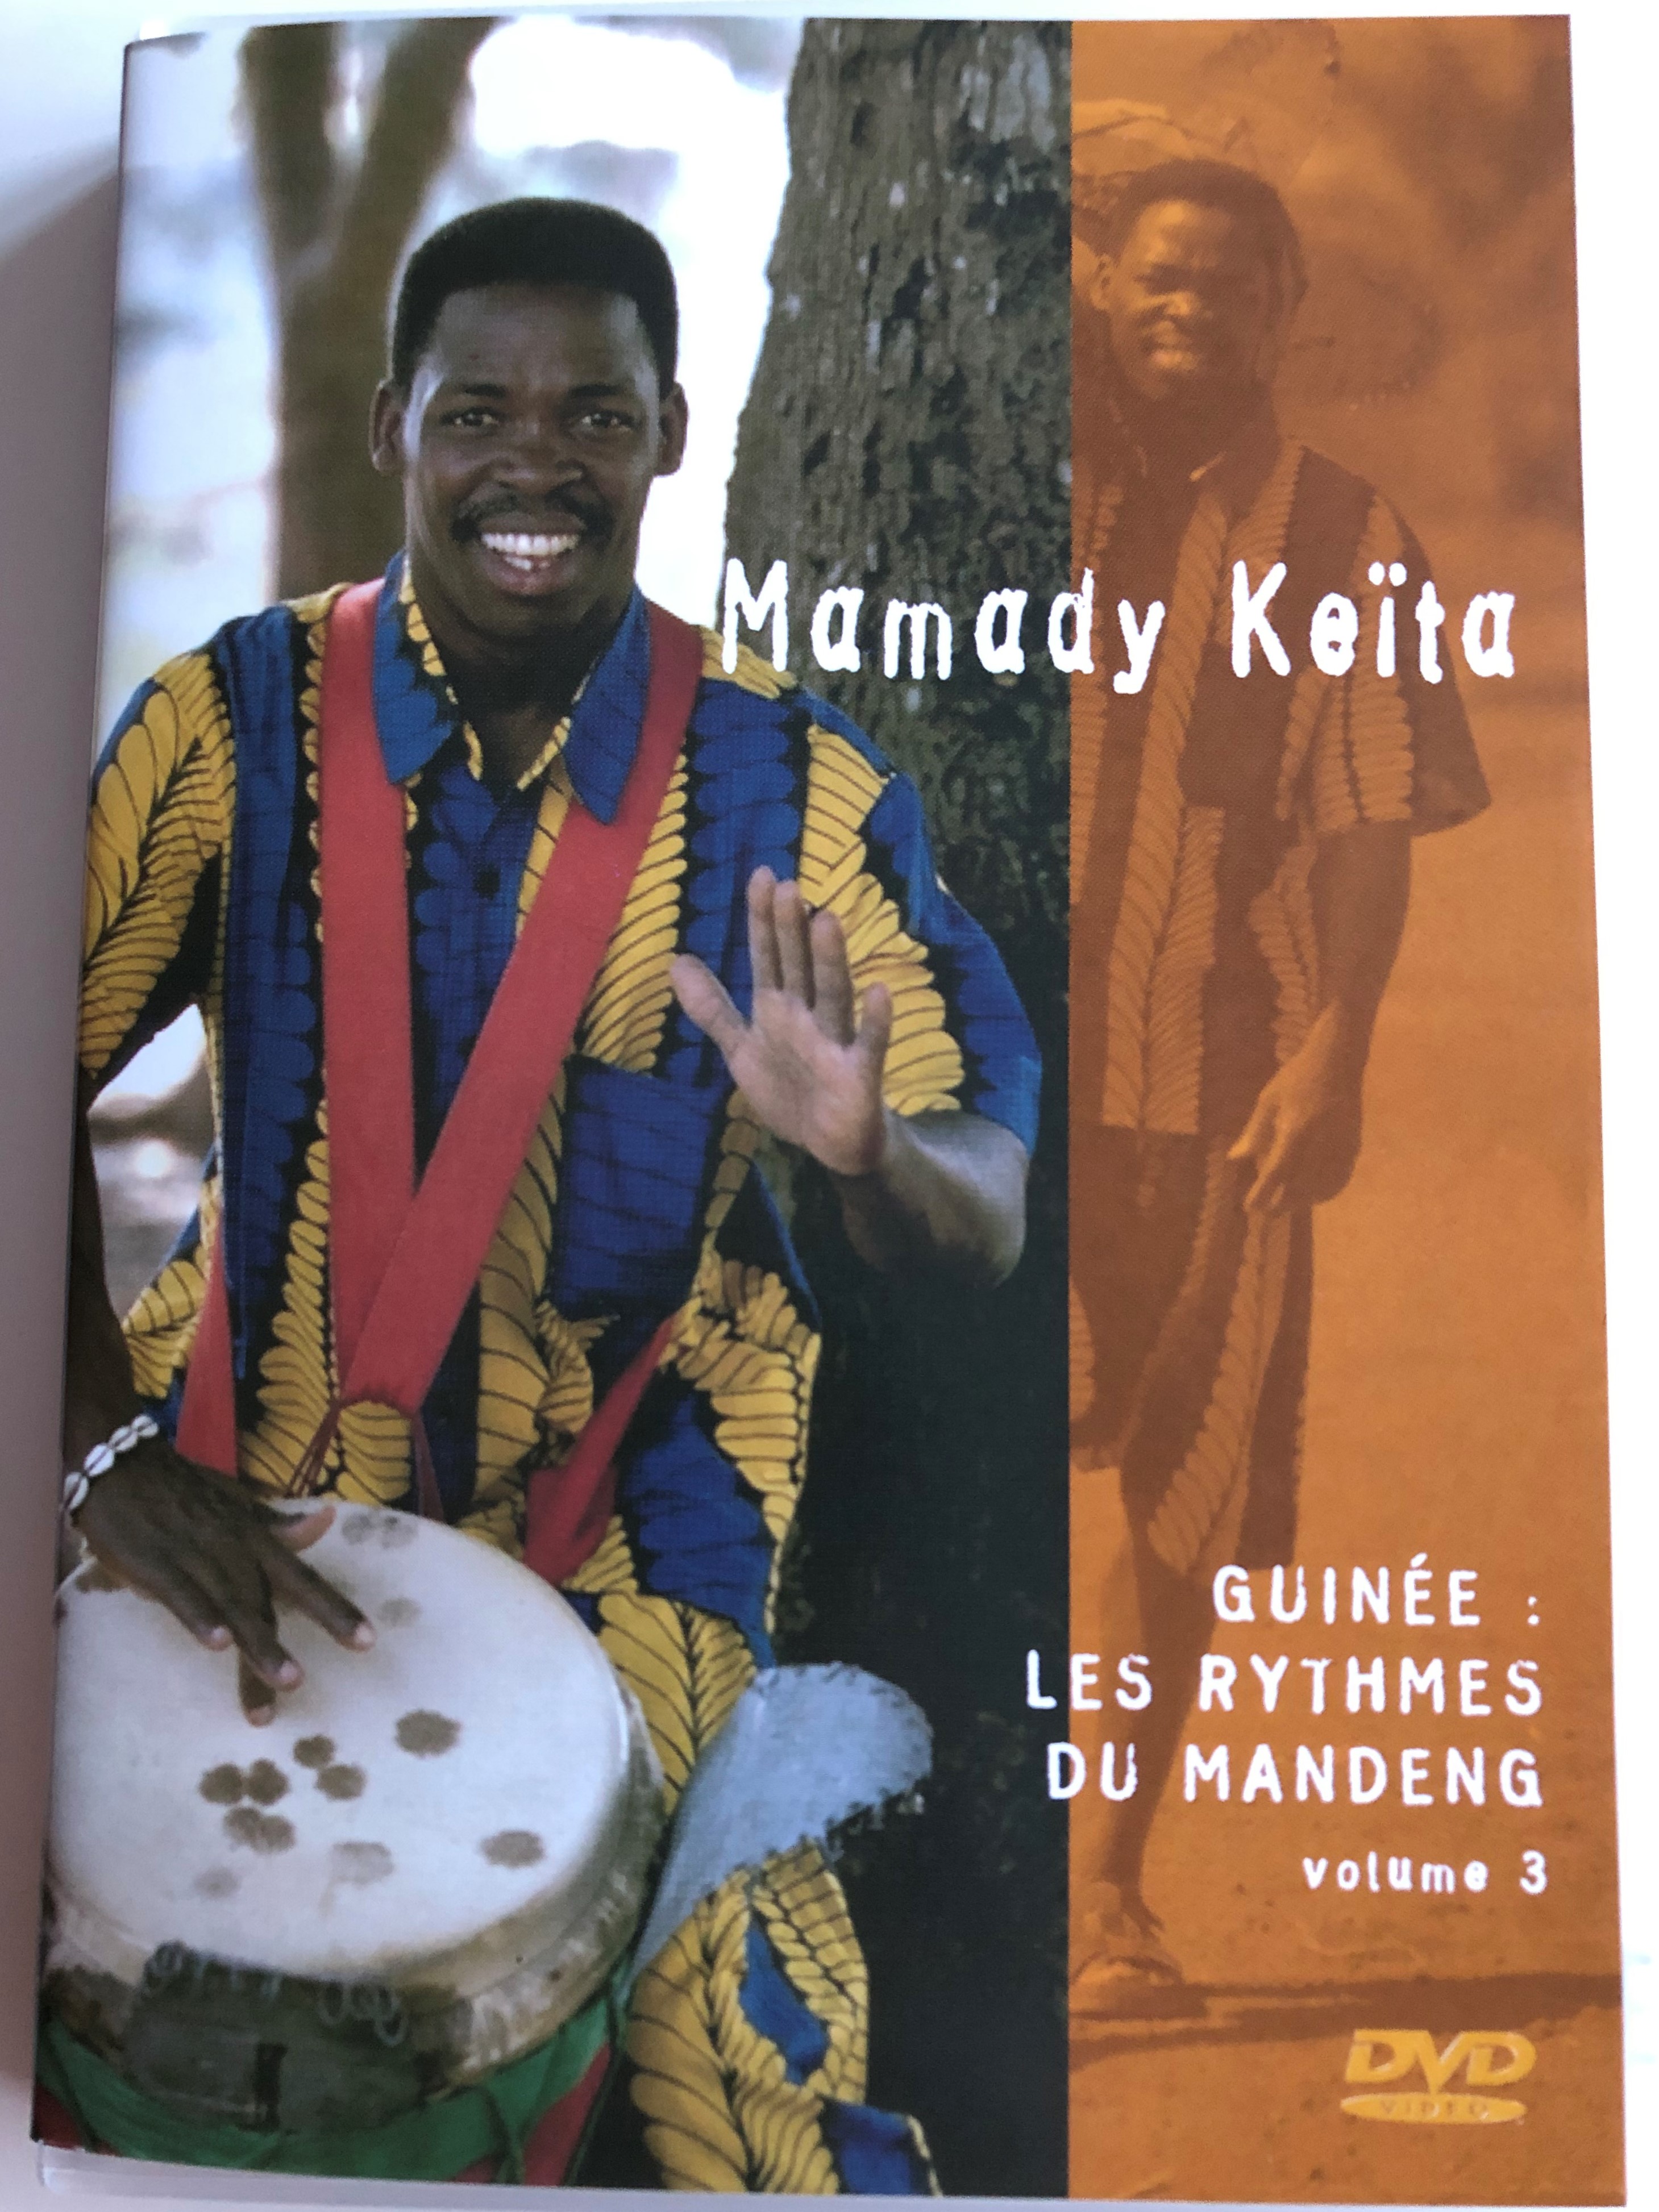 Mamady keita - Guinee Les Rythmes du Mandeng 1.JPG